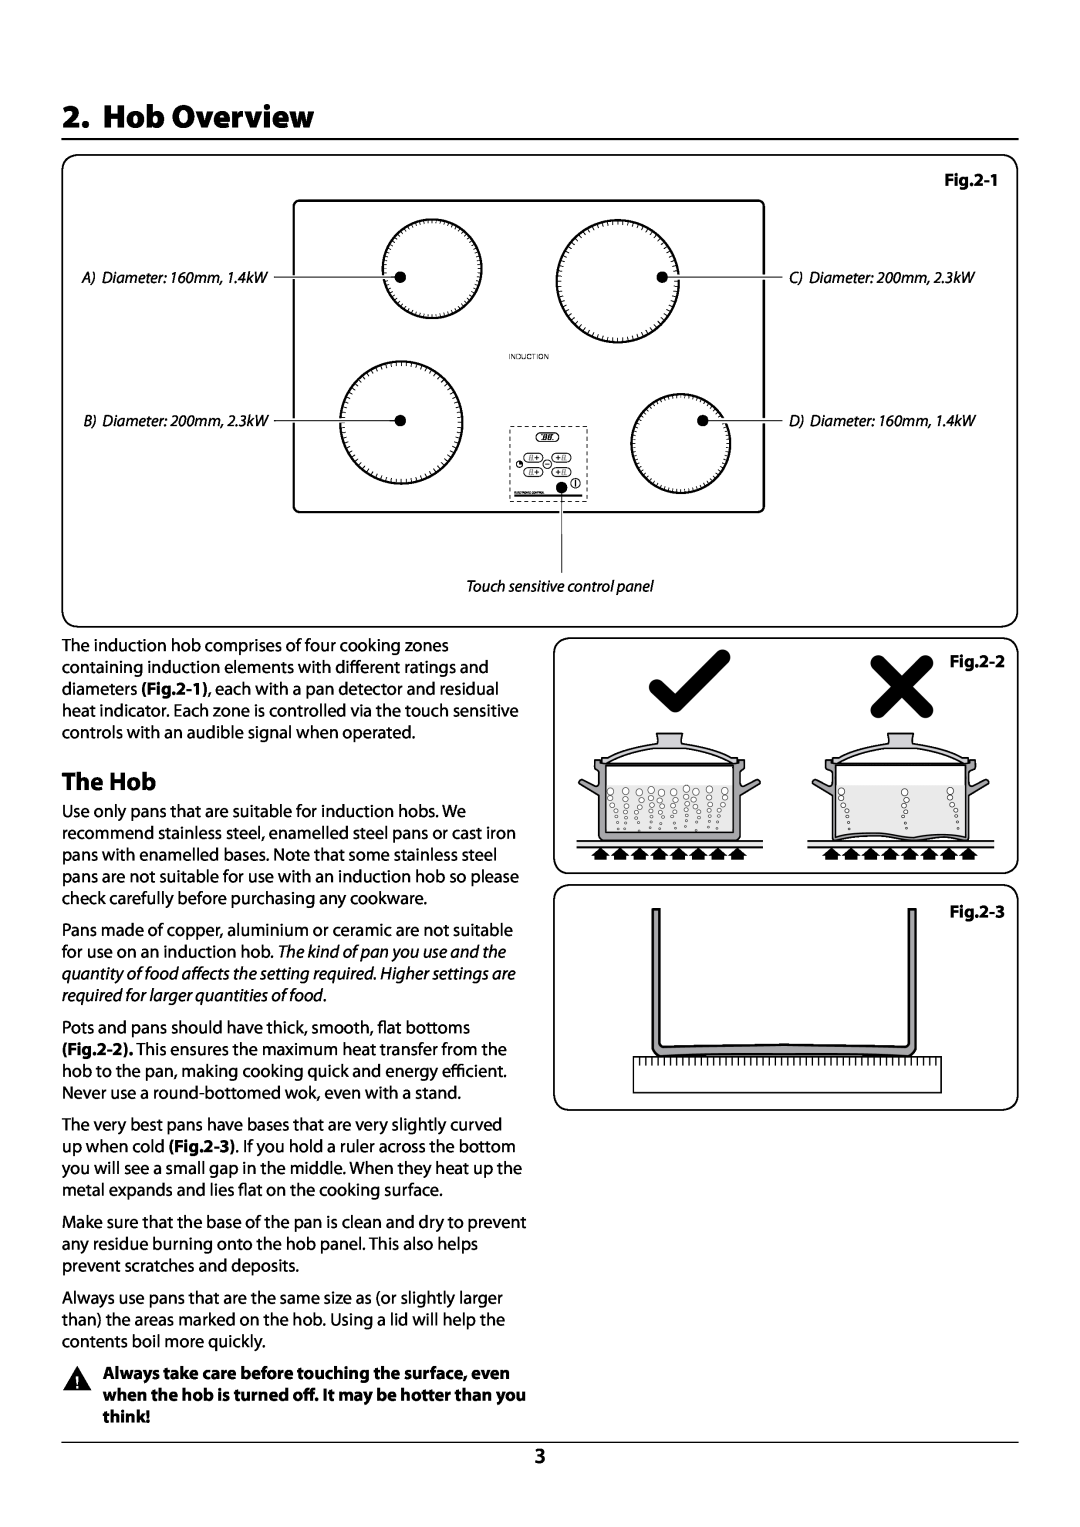 Rangemaster RI77 manual Hob Overview, The Hob, 1, 2, 3 